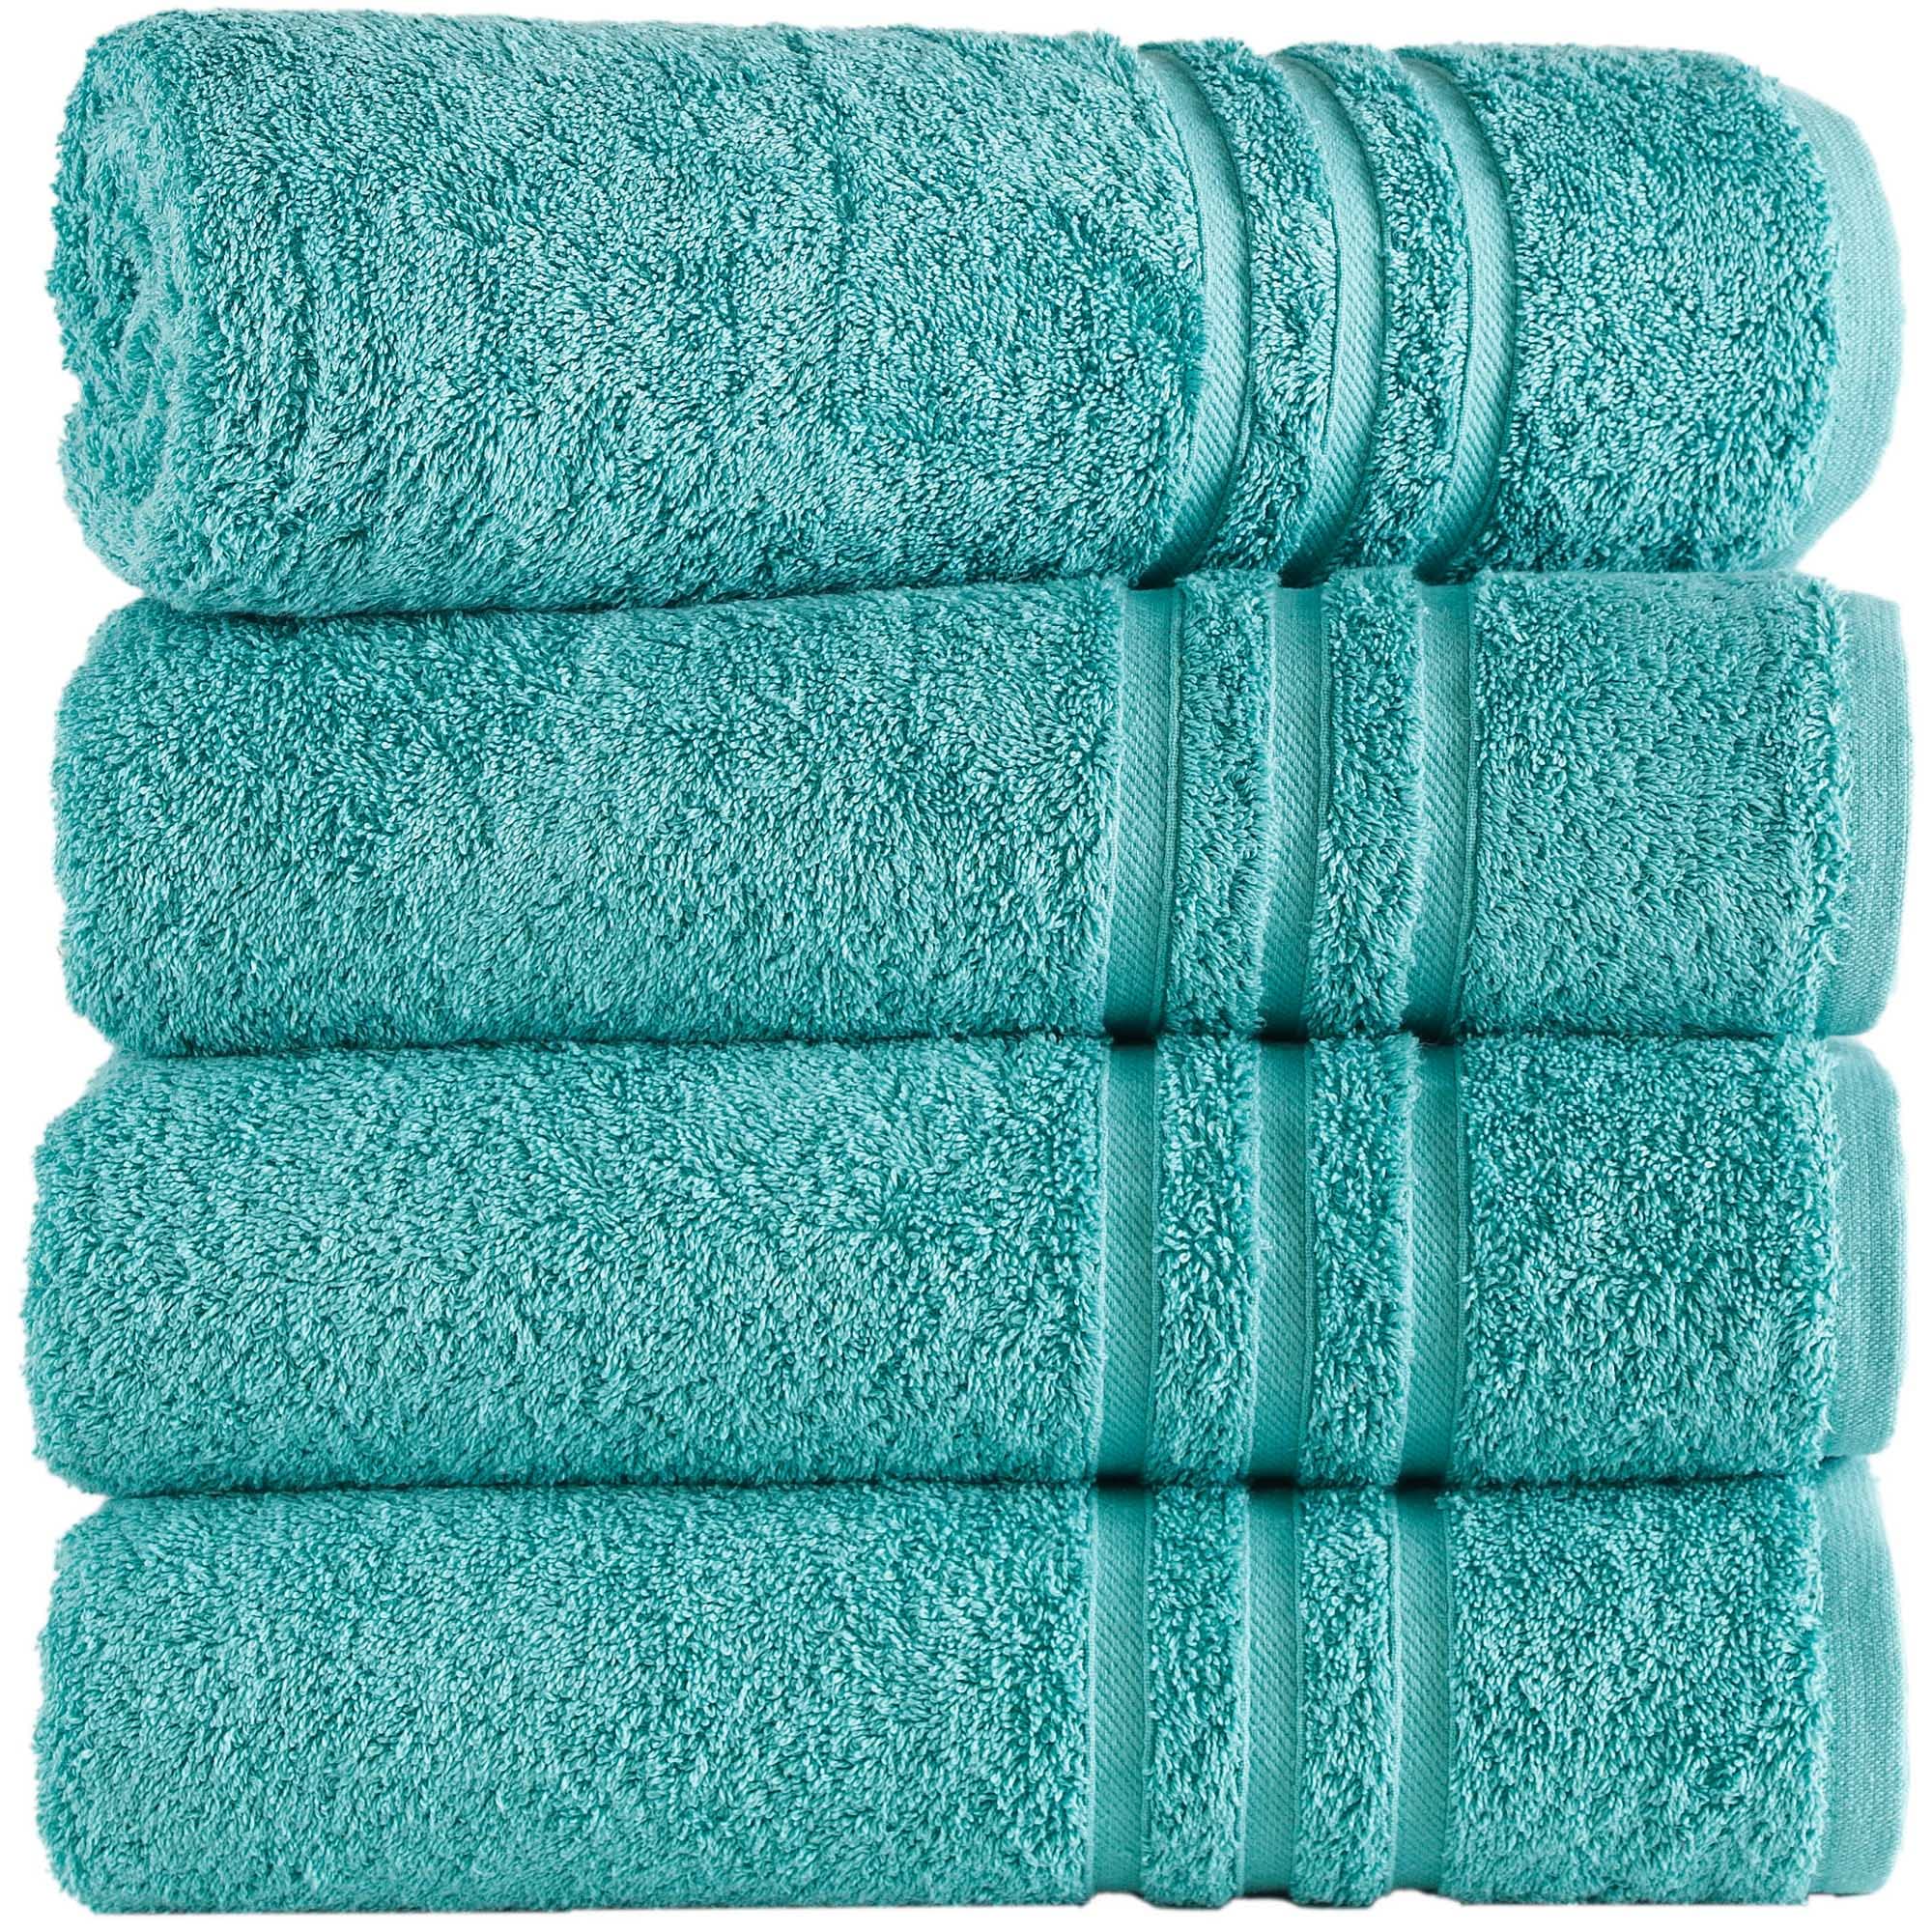 Hawmam Linen Navy Blue 6 Pack Bath Towels Sets Linen for Bathroom